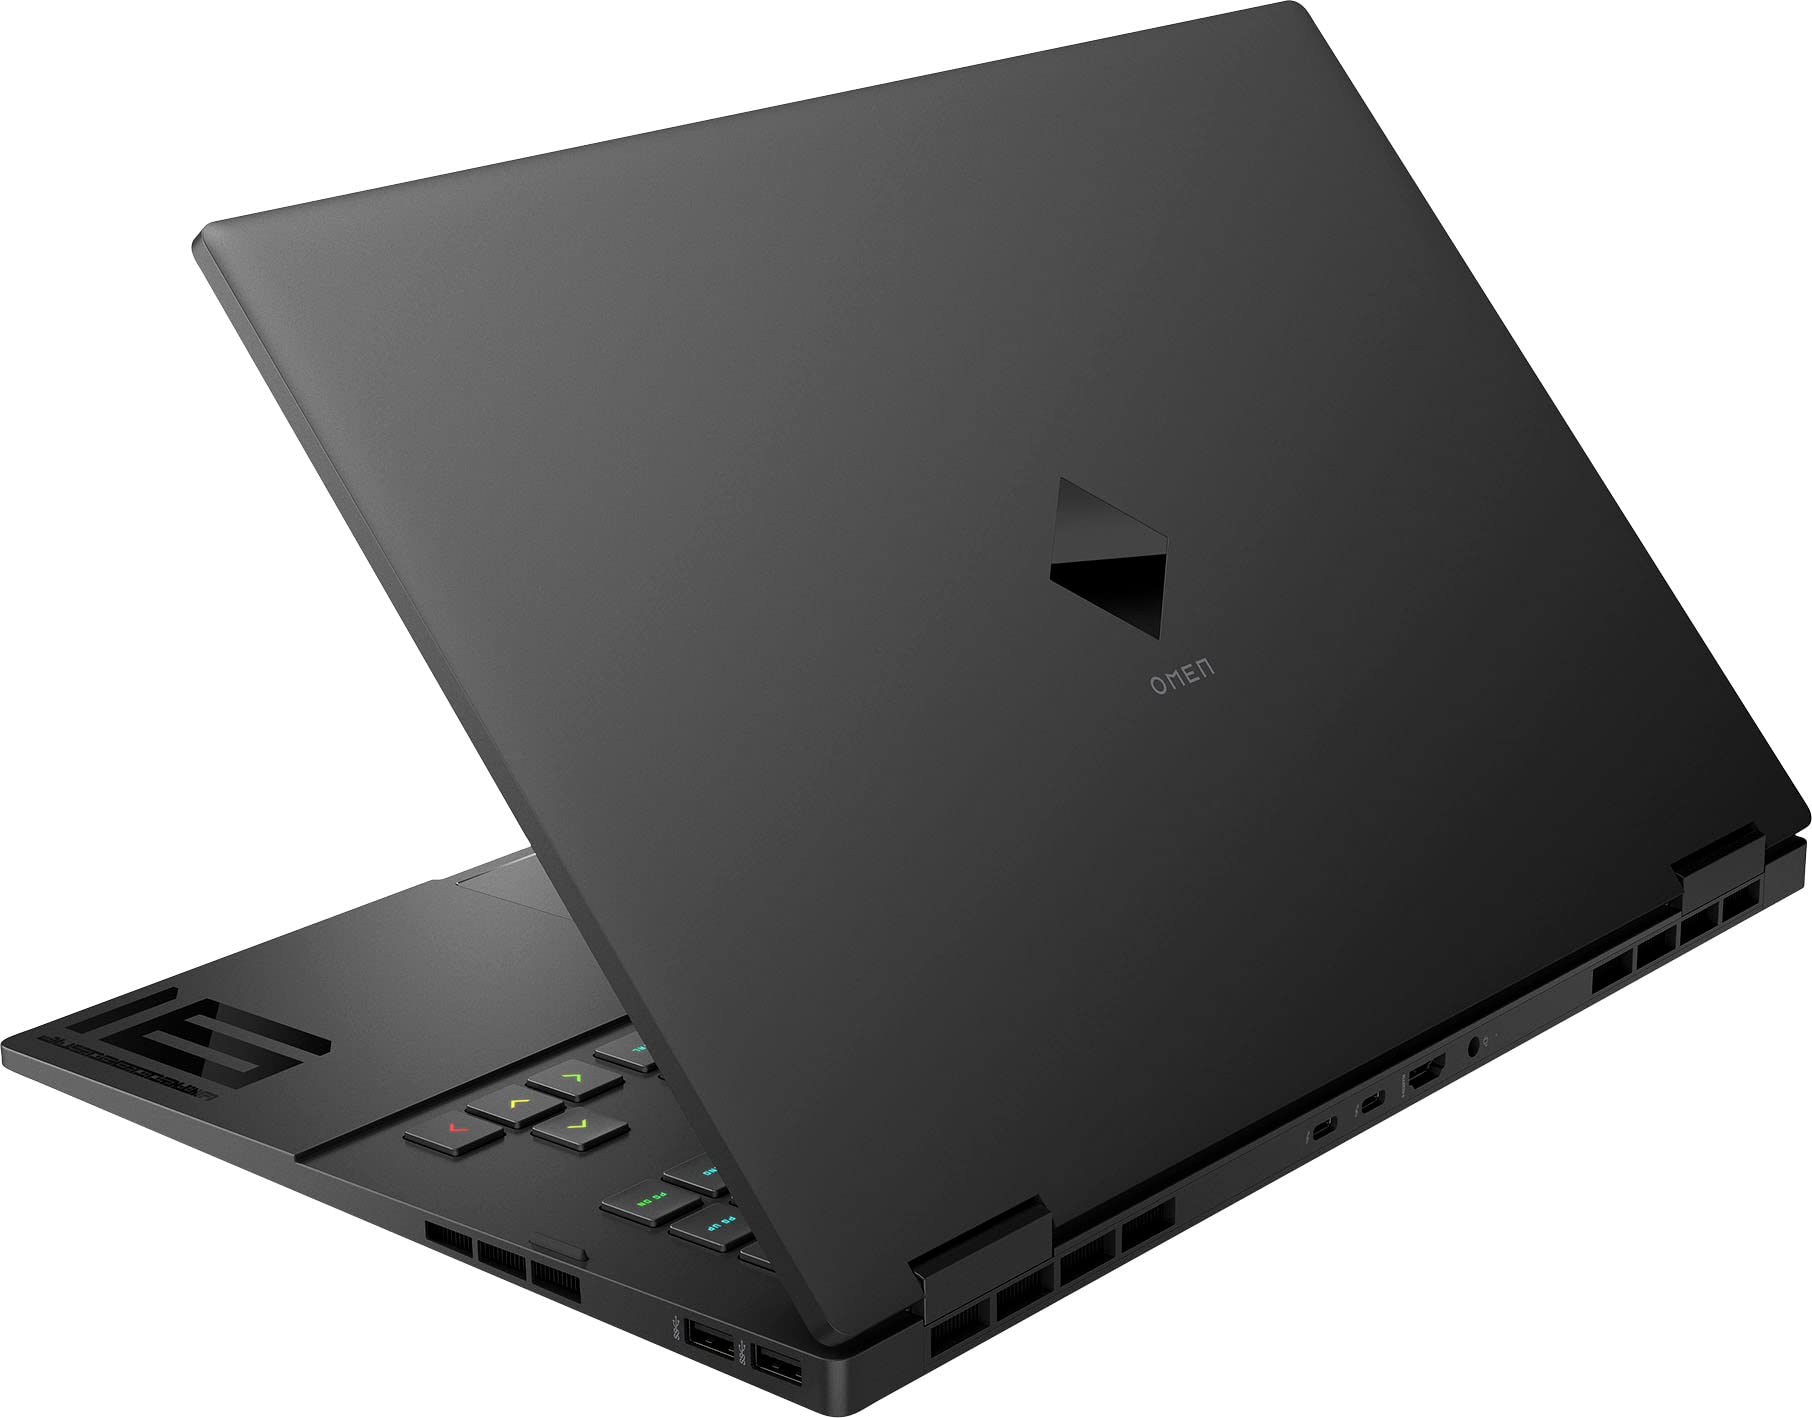 HP 2023 Gaming Laptop Omen-16-K0033DX Intel Core i9-12900H 14-Core NVIDIA GeForce RTX 3060 6 GB 32 GB DDR5 1 TB SSD 16.1